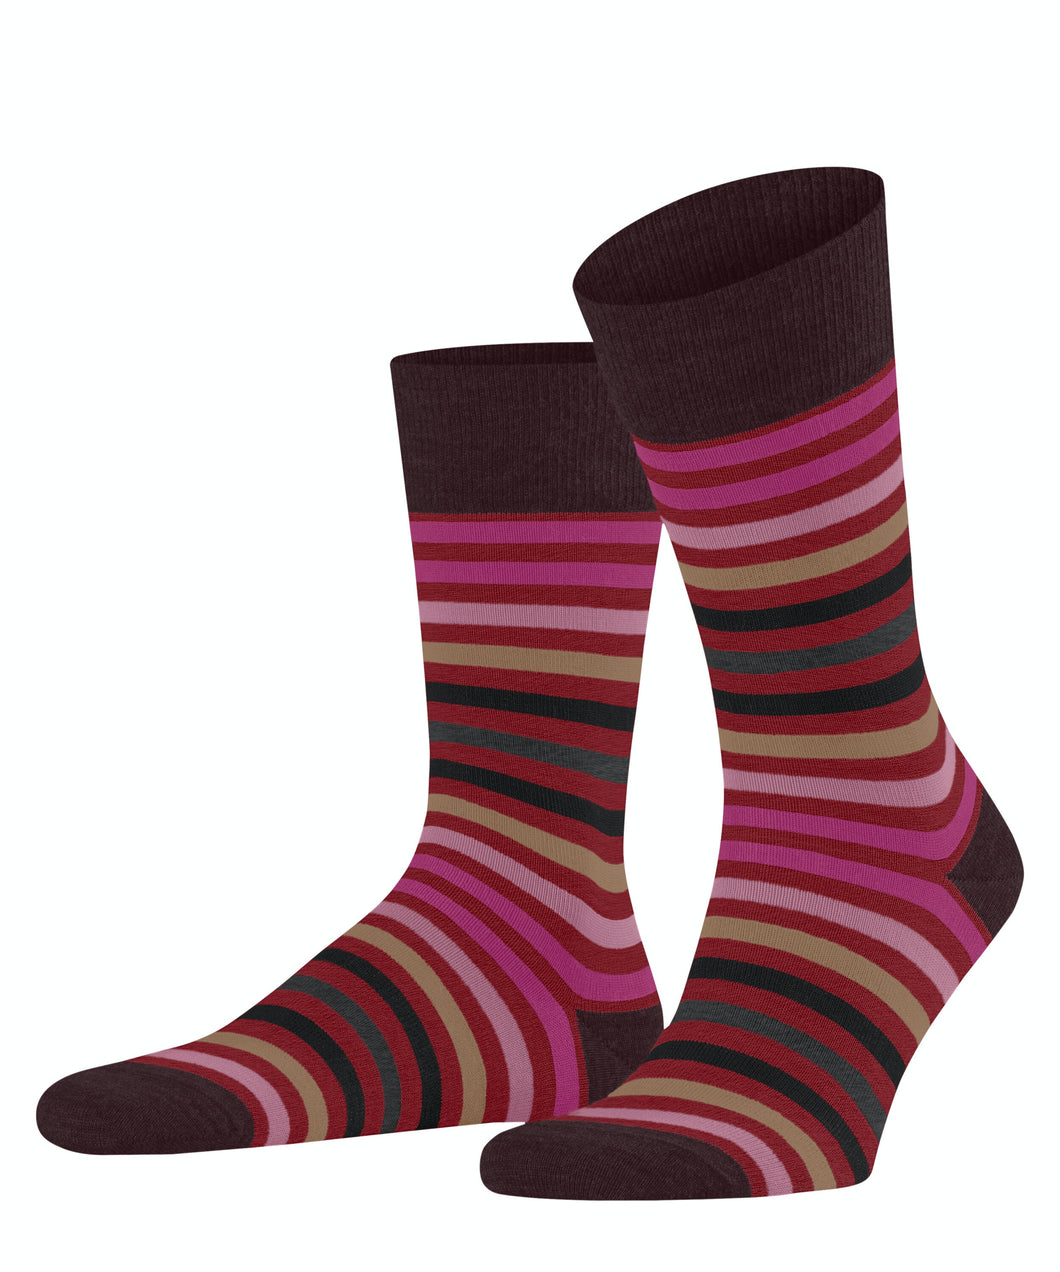 FALKE Tinted Stripe Socks in Wine-Pink